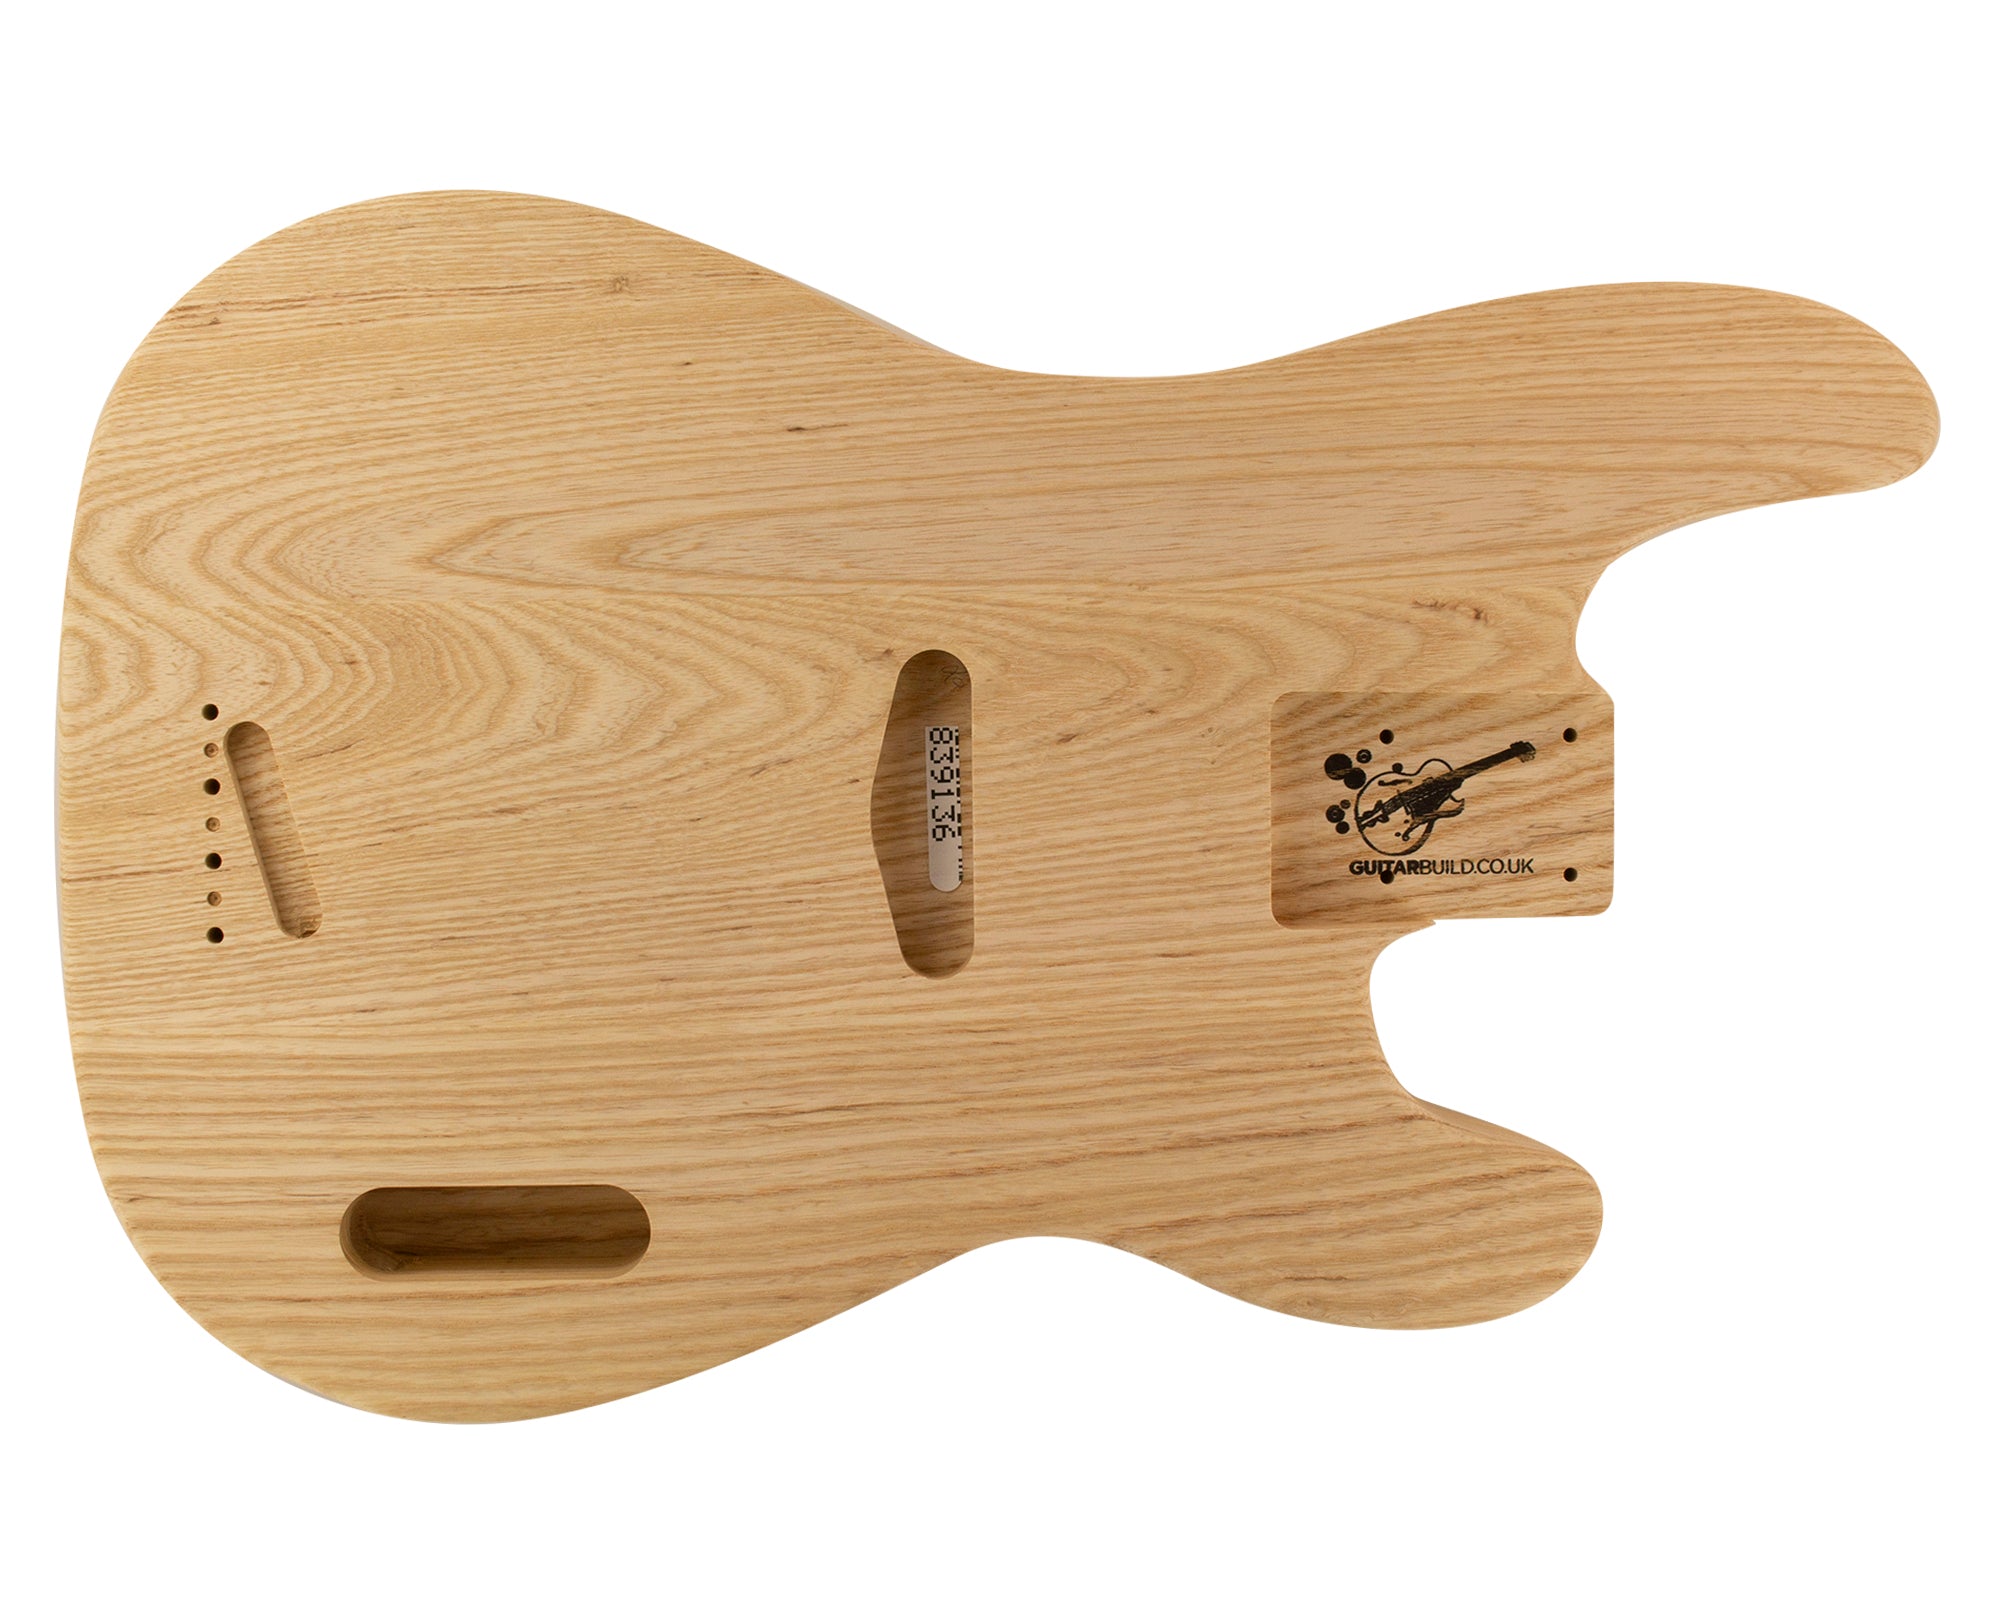 PB BODY 51 3pc Swamp Ash 2.8 Kg - 839136-Bass Bodies - In Stock-Guitarbuild